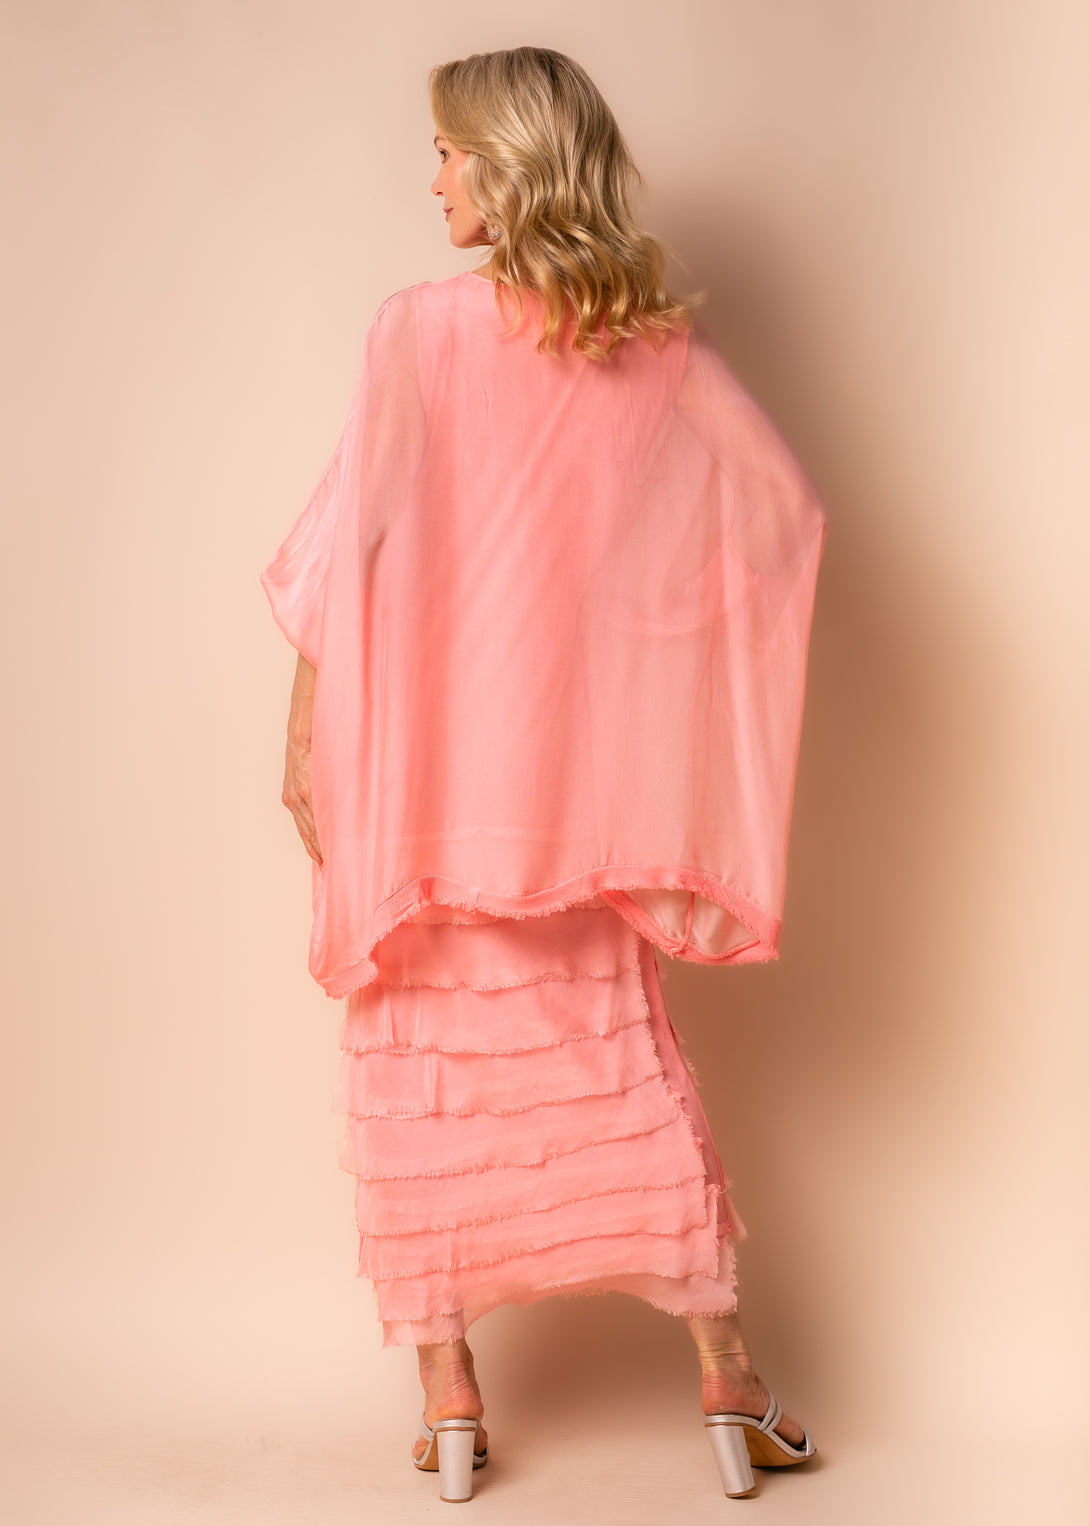 Candie Silk Dress in Coral Crush - Imagine Fashion